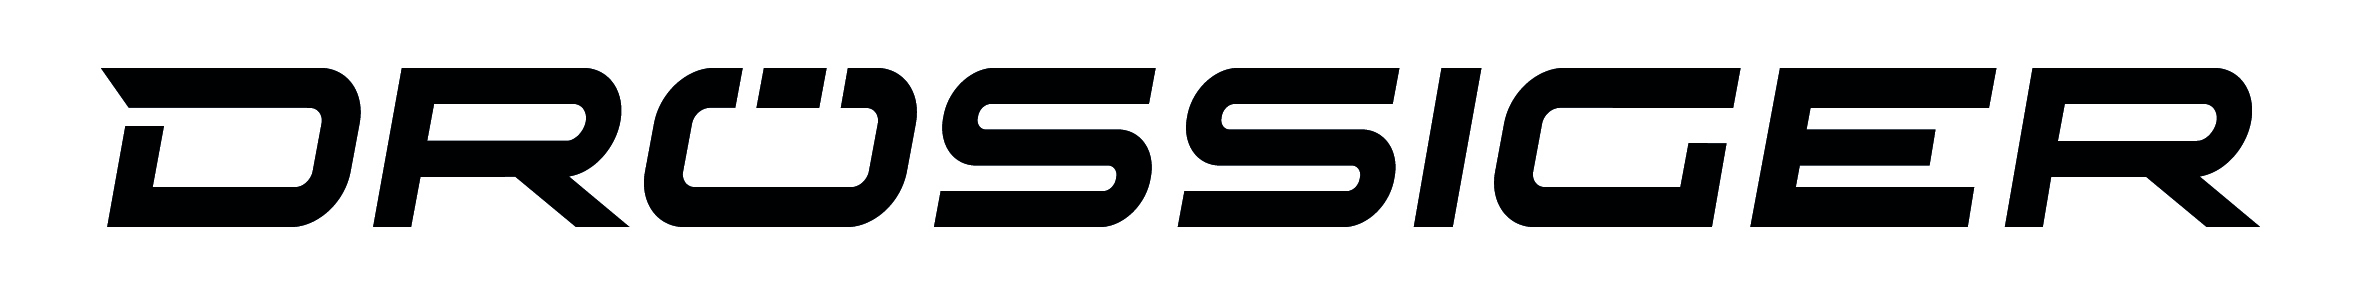 Droessiger_Logo.jpg